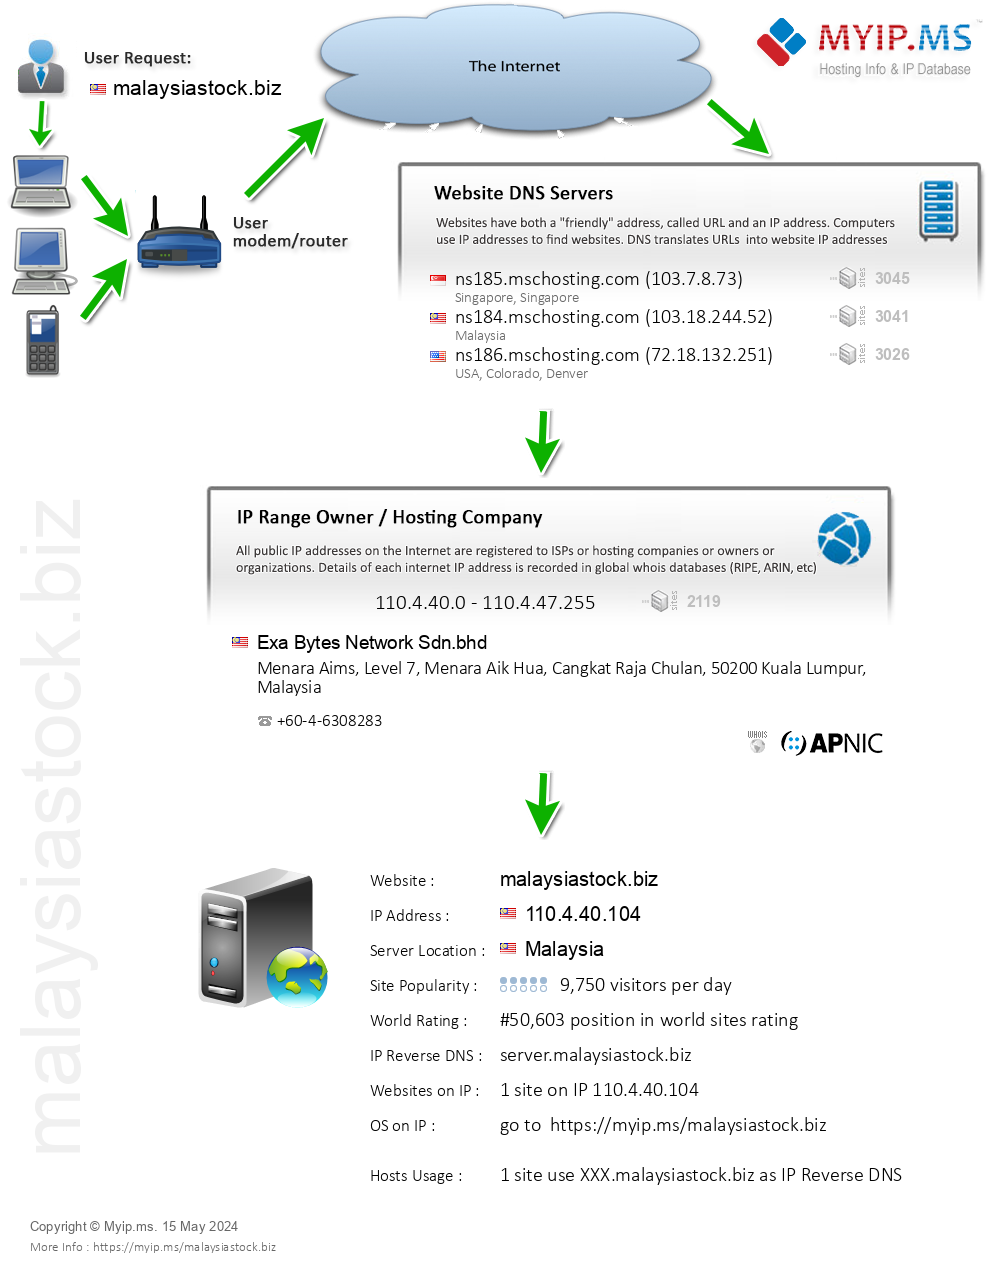 Malaysiastock.biz - Website Hosting Visual IP Diagram